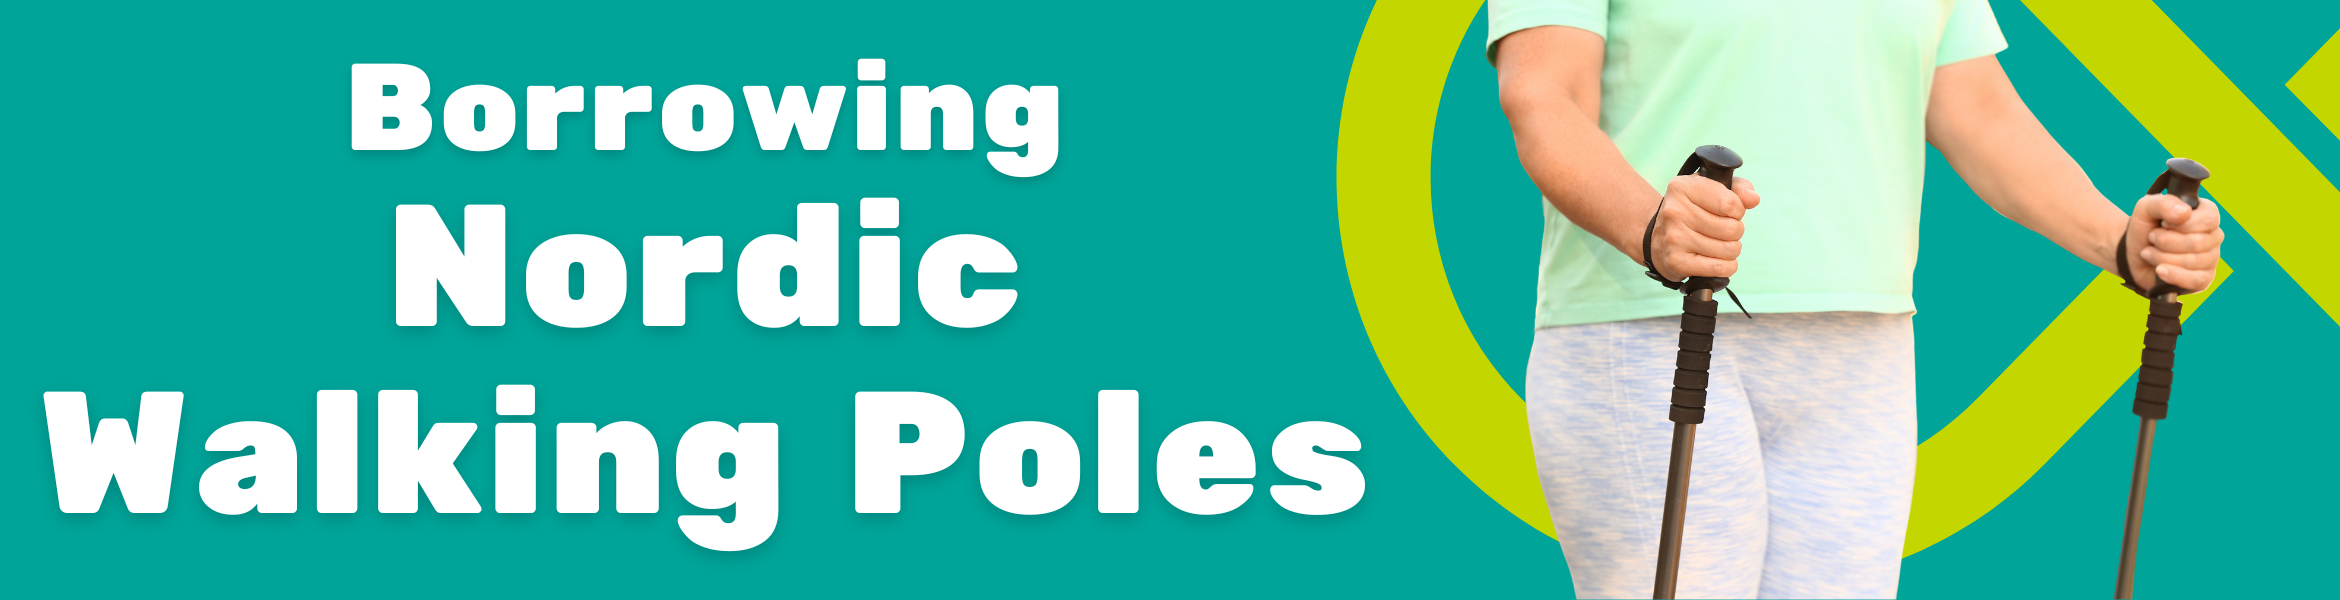 Borrowing Nordic Walking Poles banner